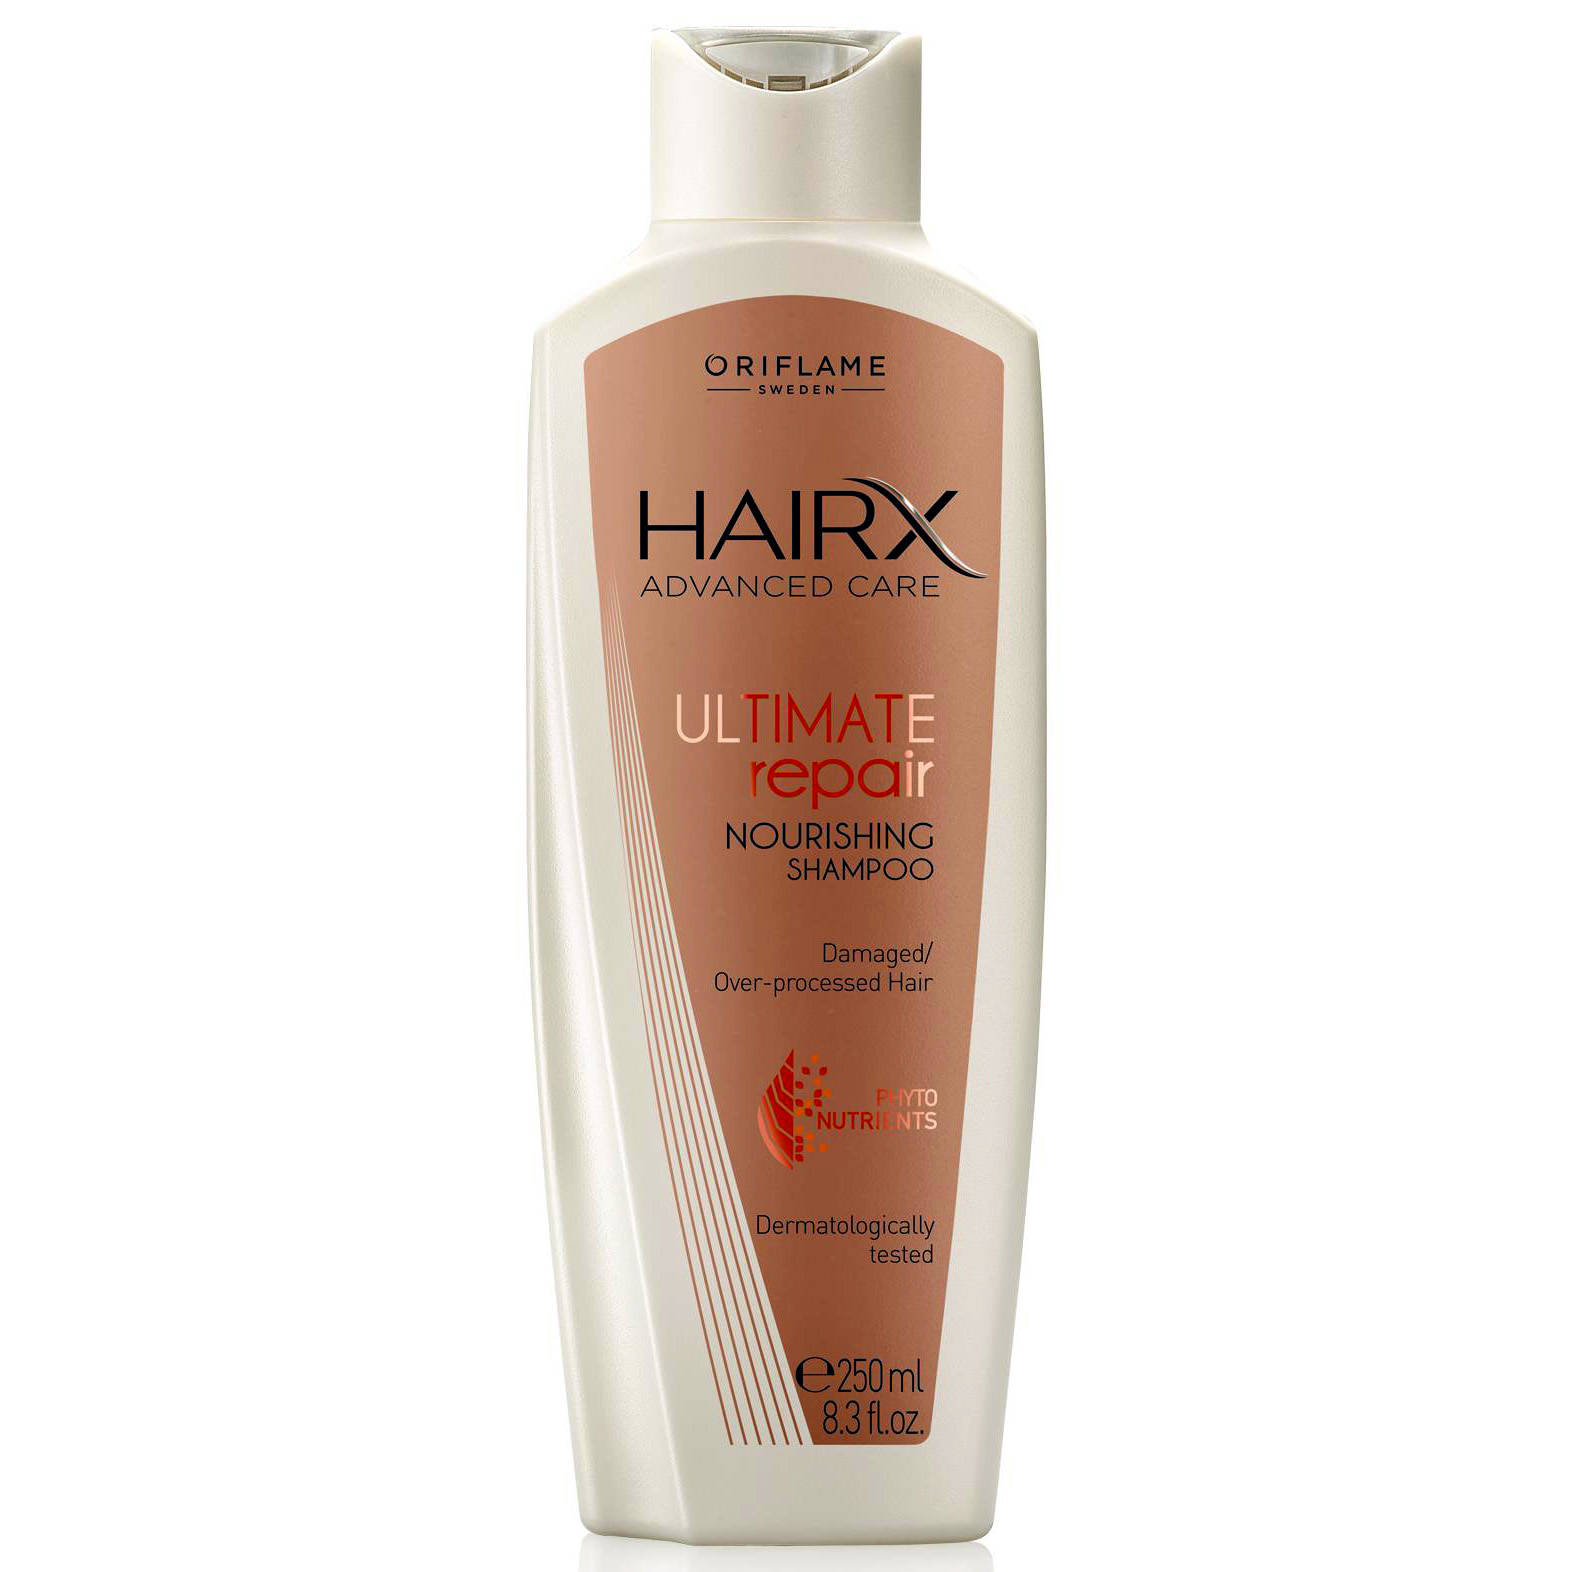 hairx advanced timeresist szampon ceneo